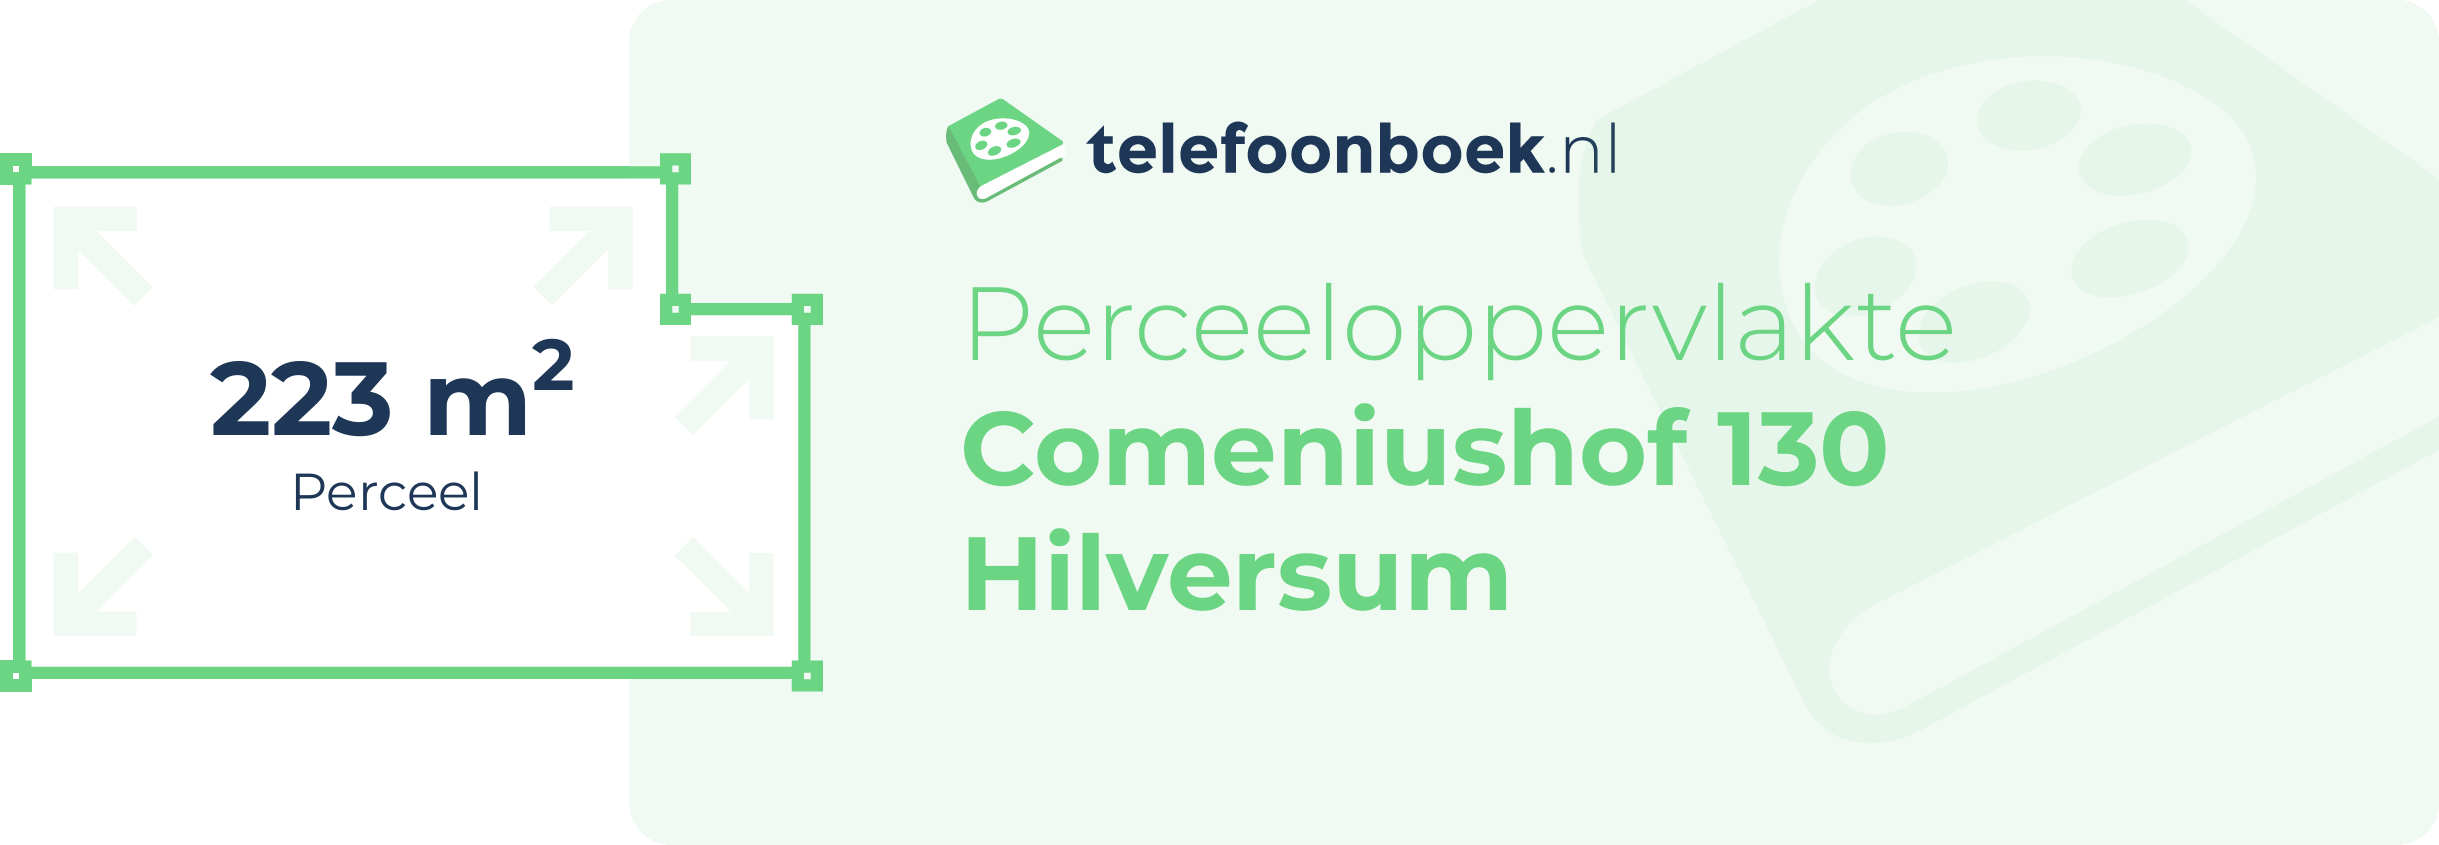 Perceeloppervlakte Comeniushof 130 Hilversum